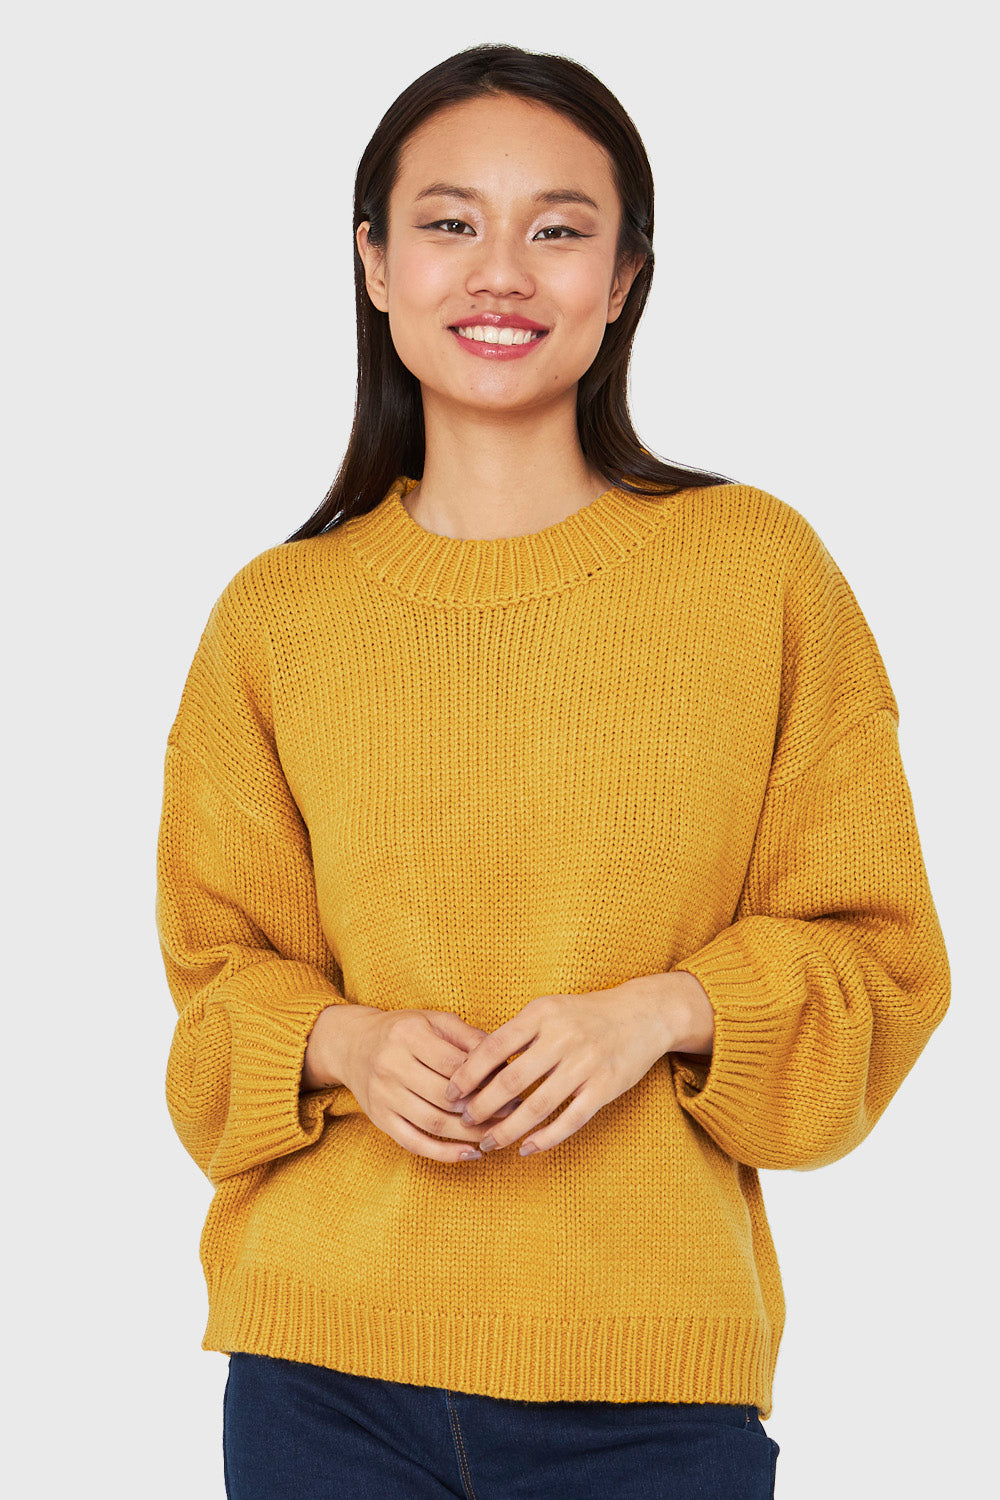 Sweater Básico Holgado Mostaza